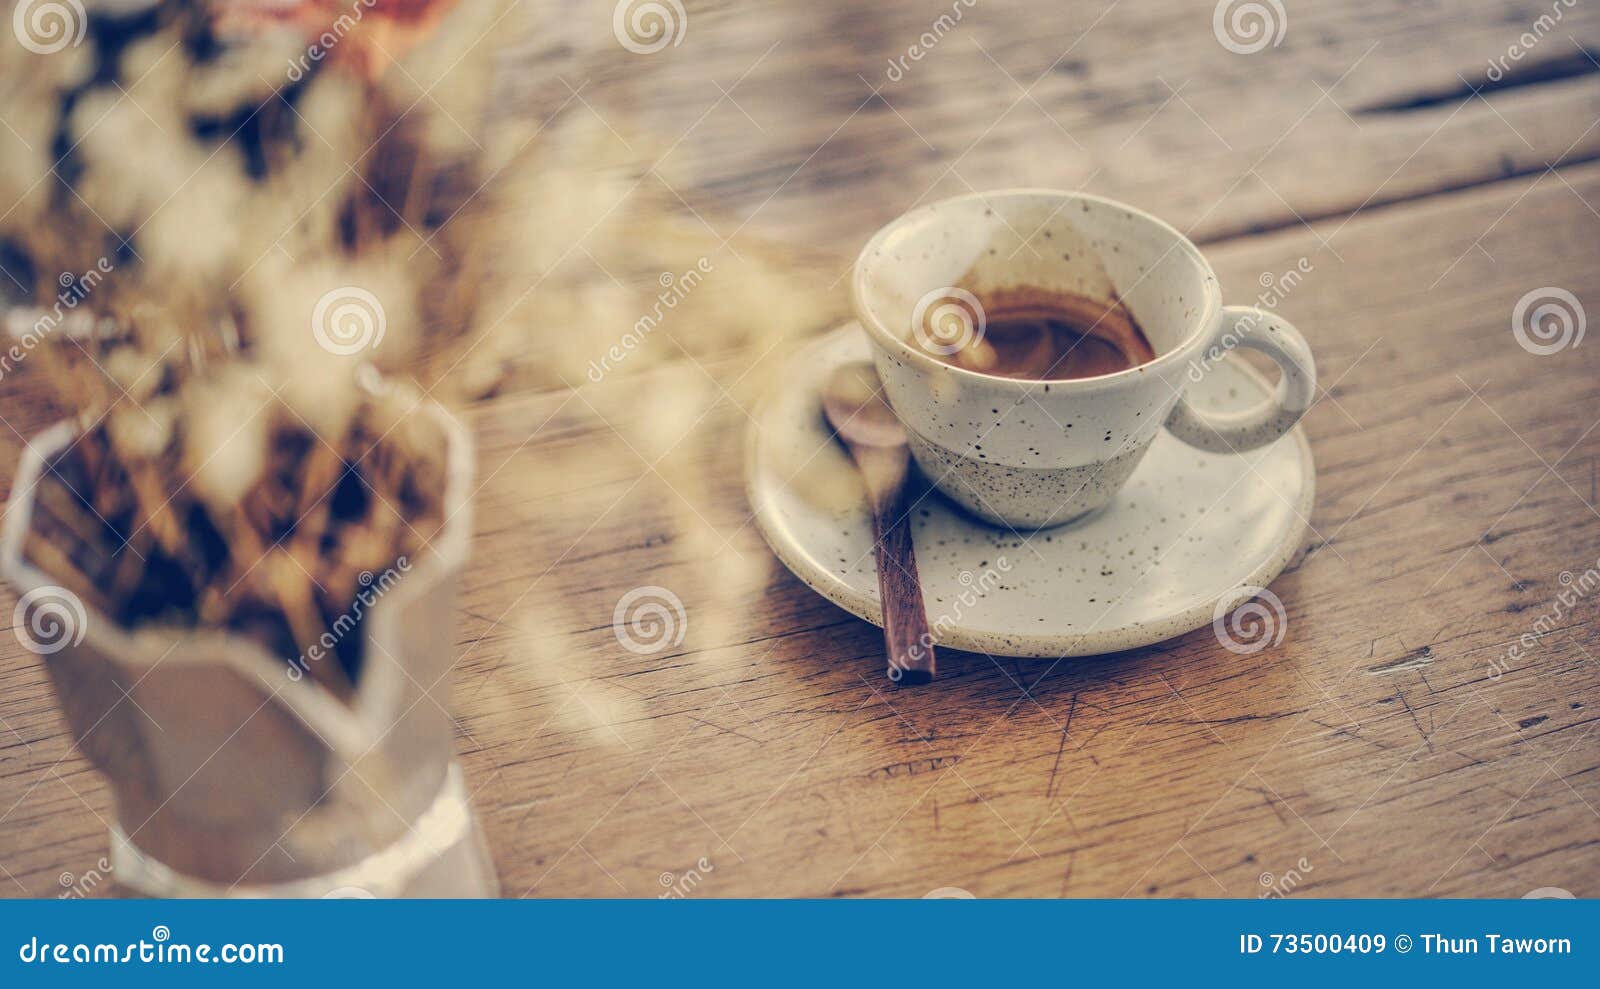 hot coffee latte